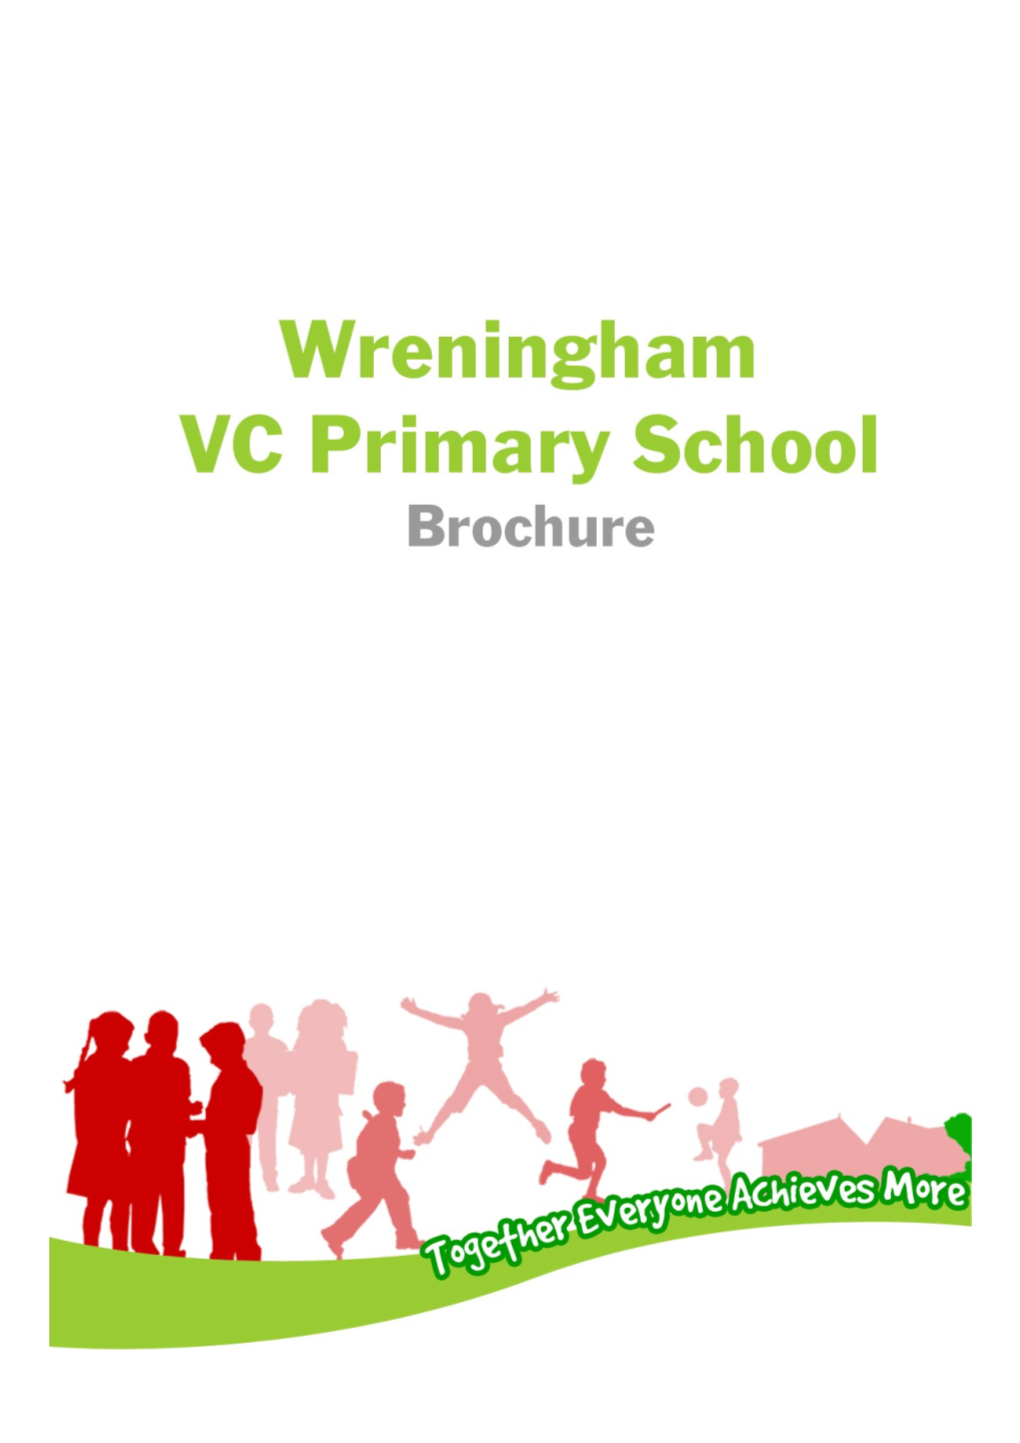 Welcome to Wreningham VC Primary School